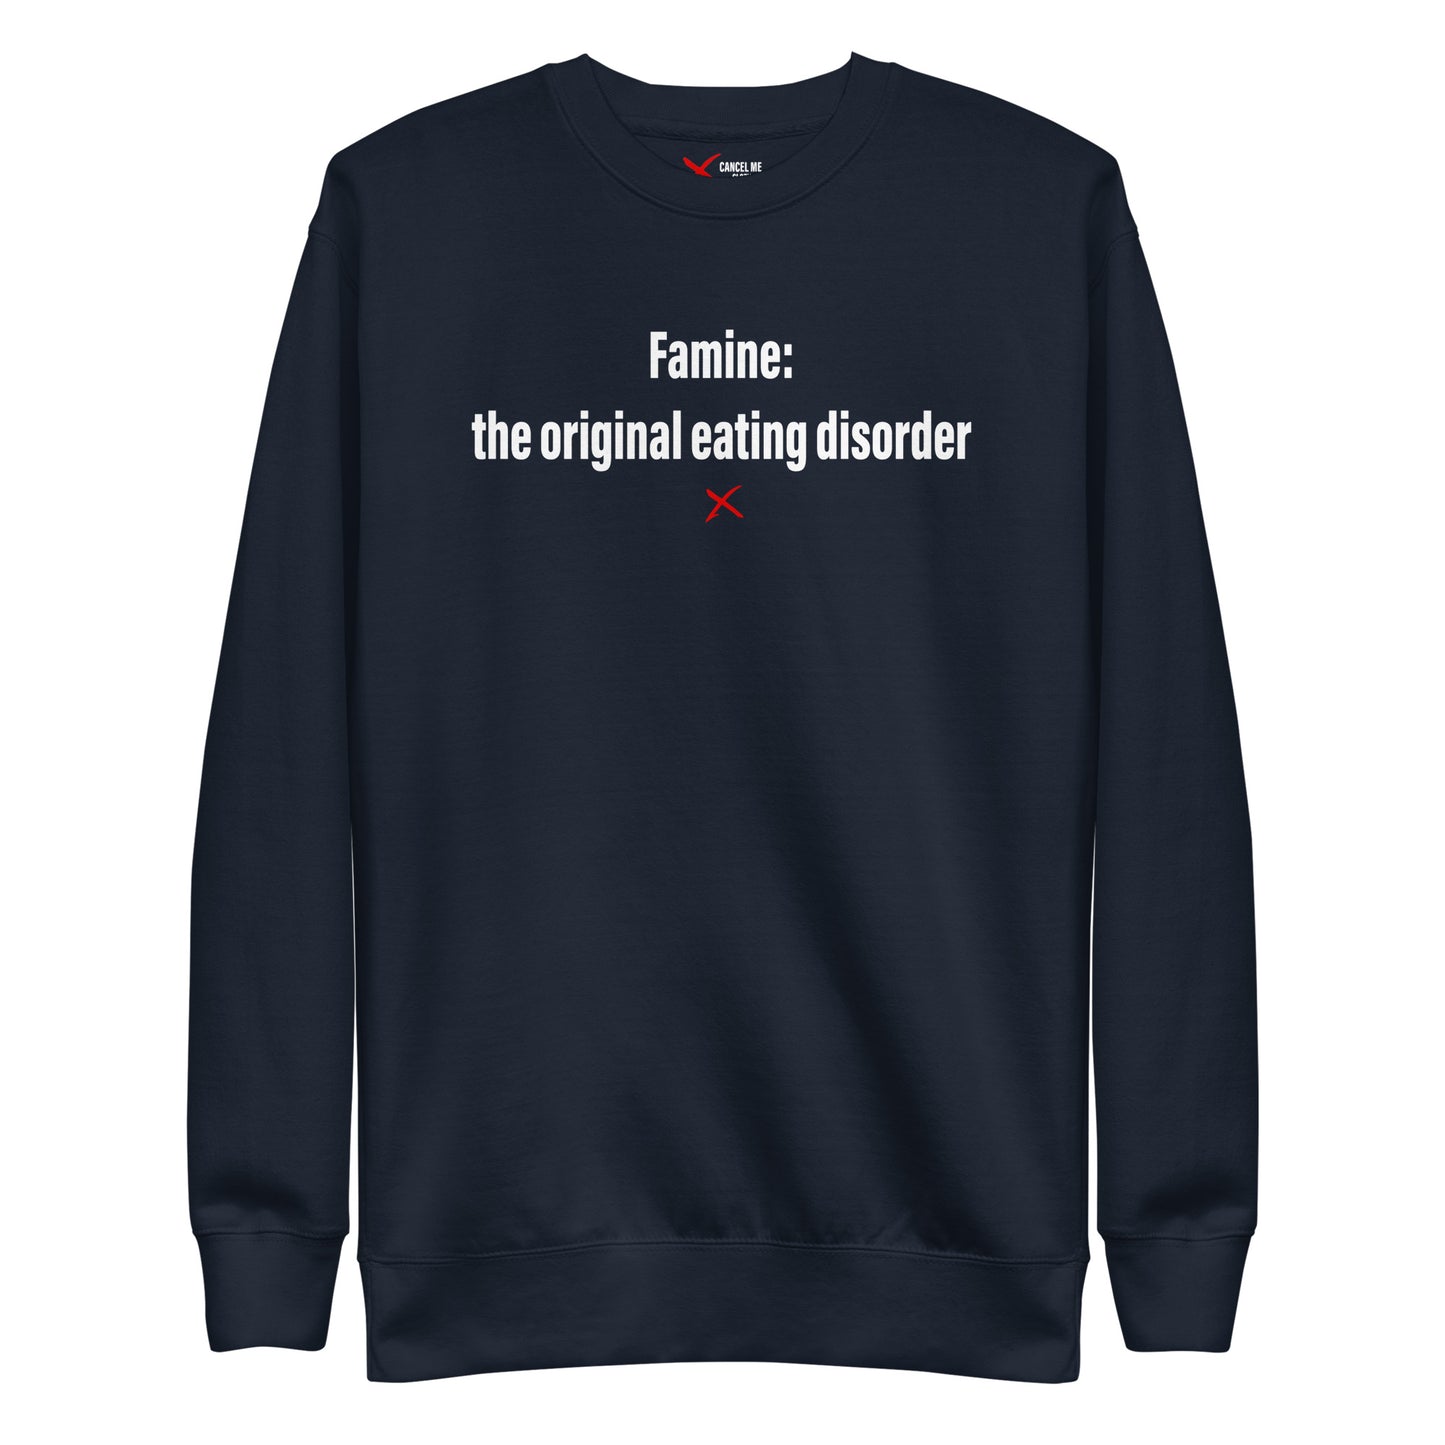 Famine: the original eating disorder - Sweatshirt